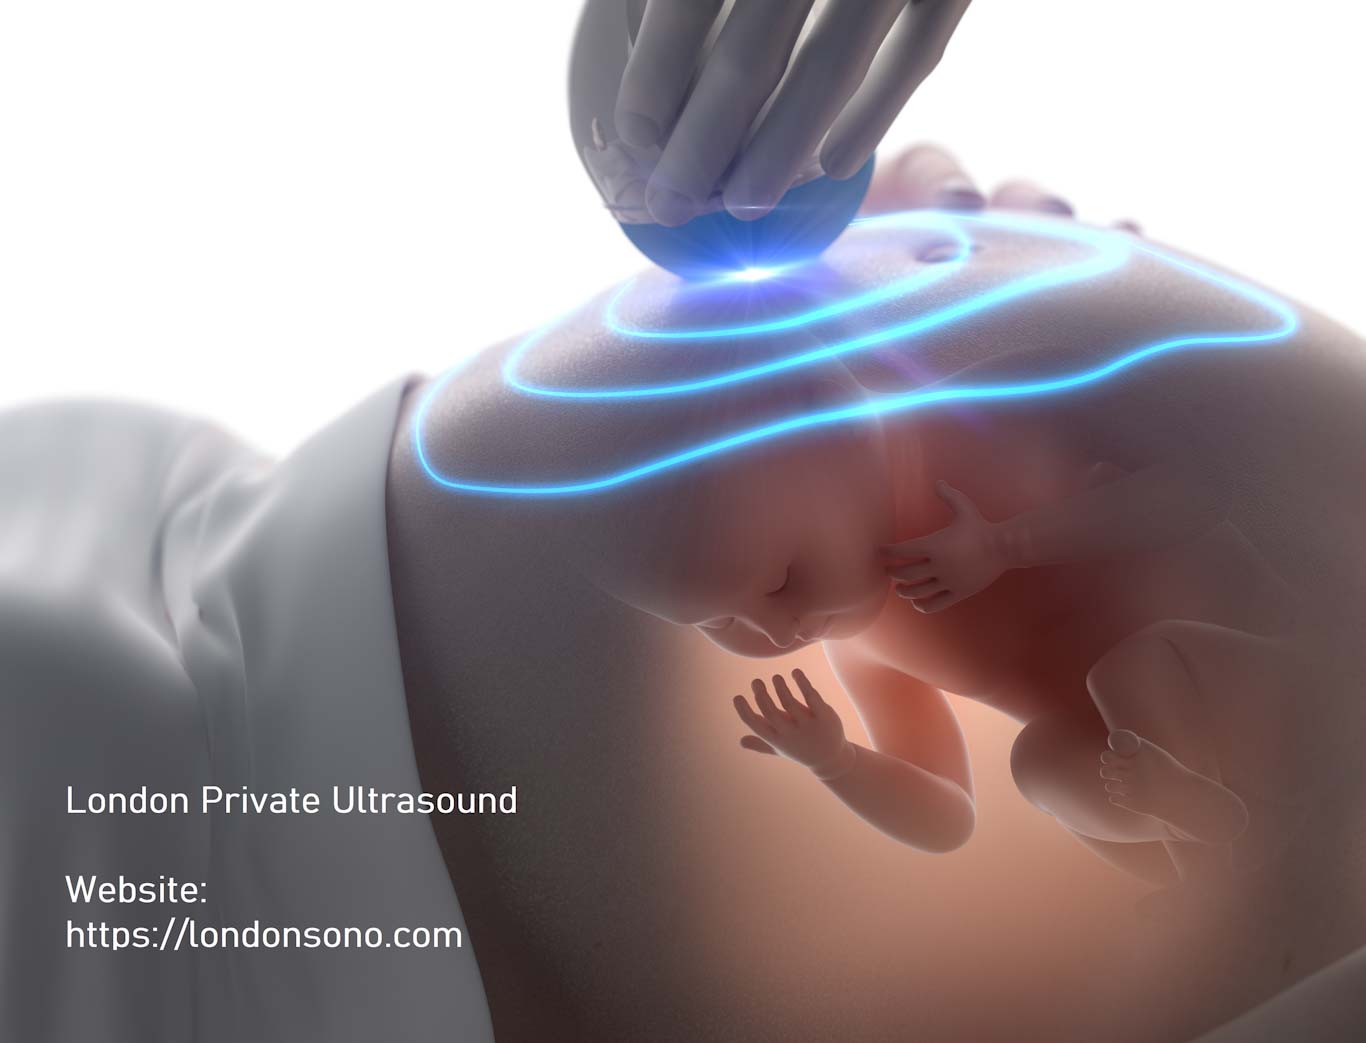 3D ultrasound during pregnancy concept